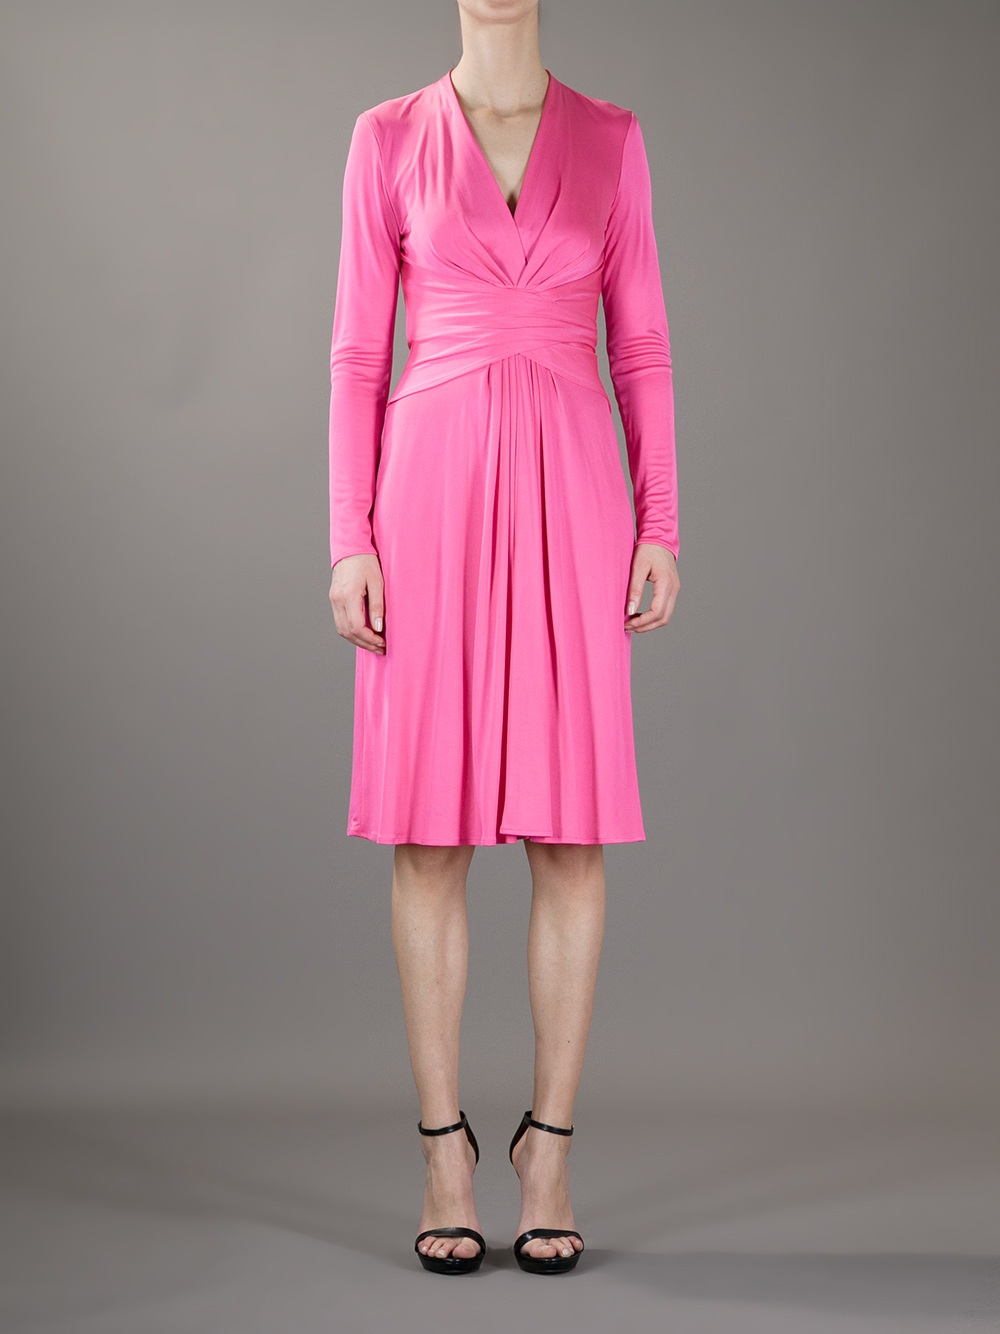 Issa Long Sleeve Wrap Dress in Pink | Lyst